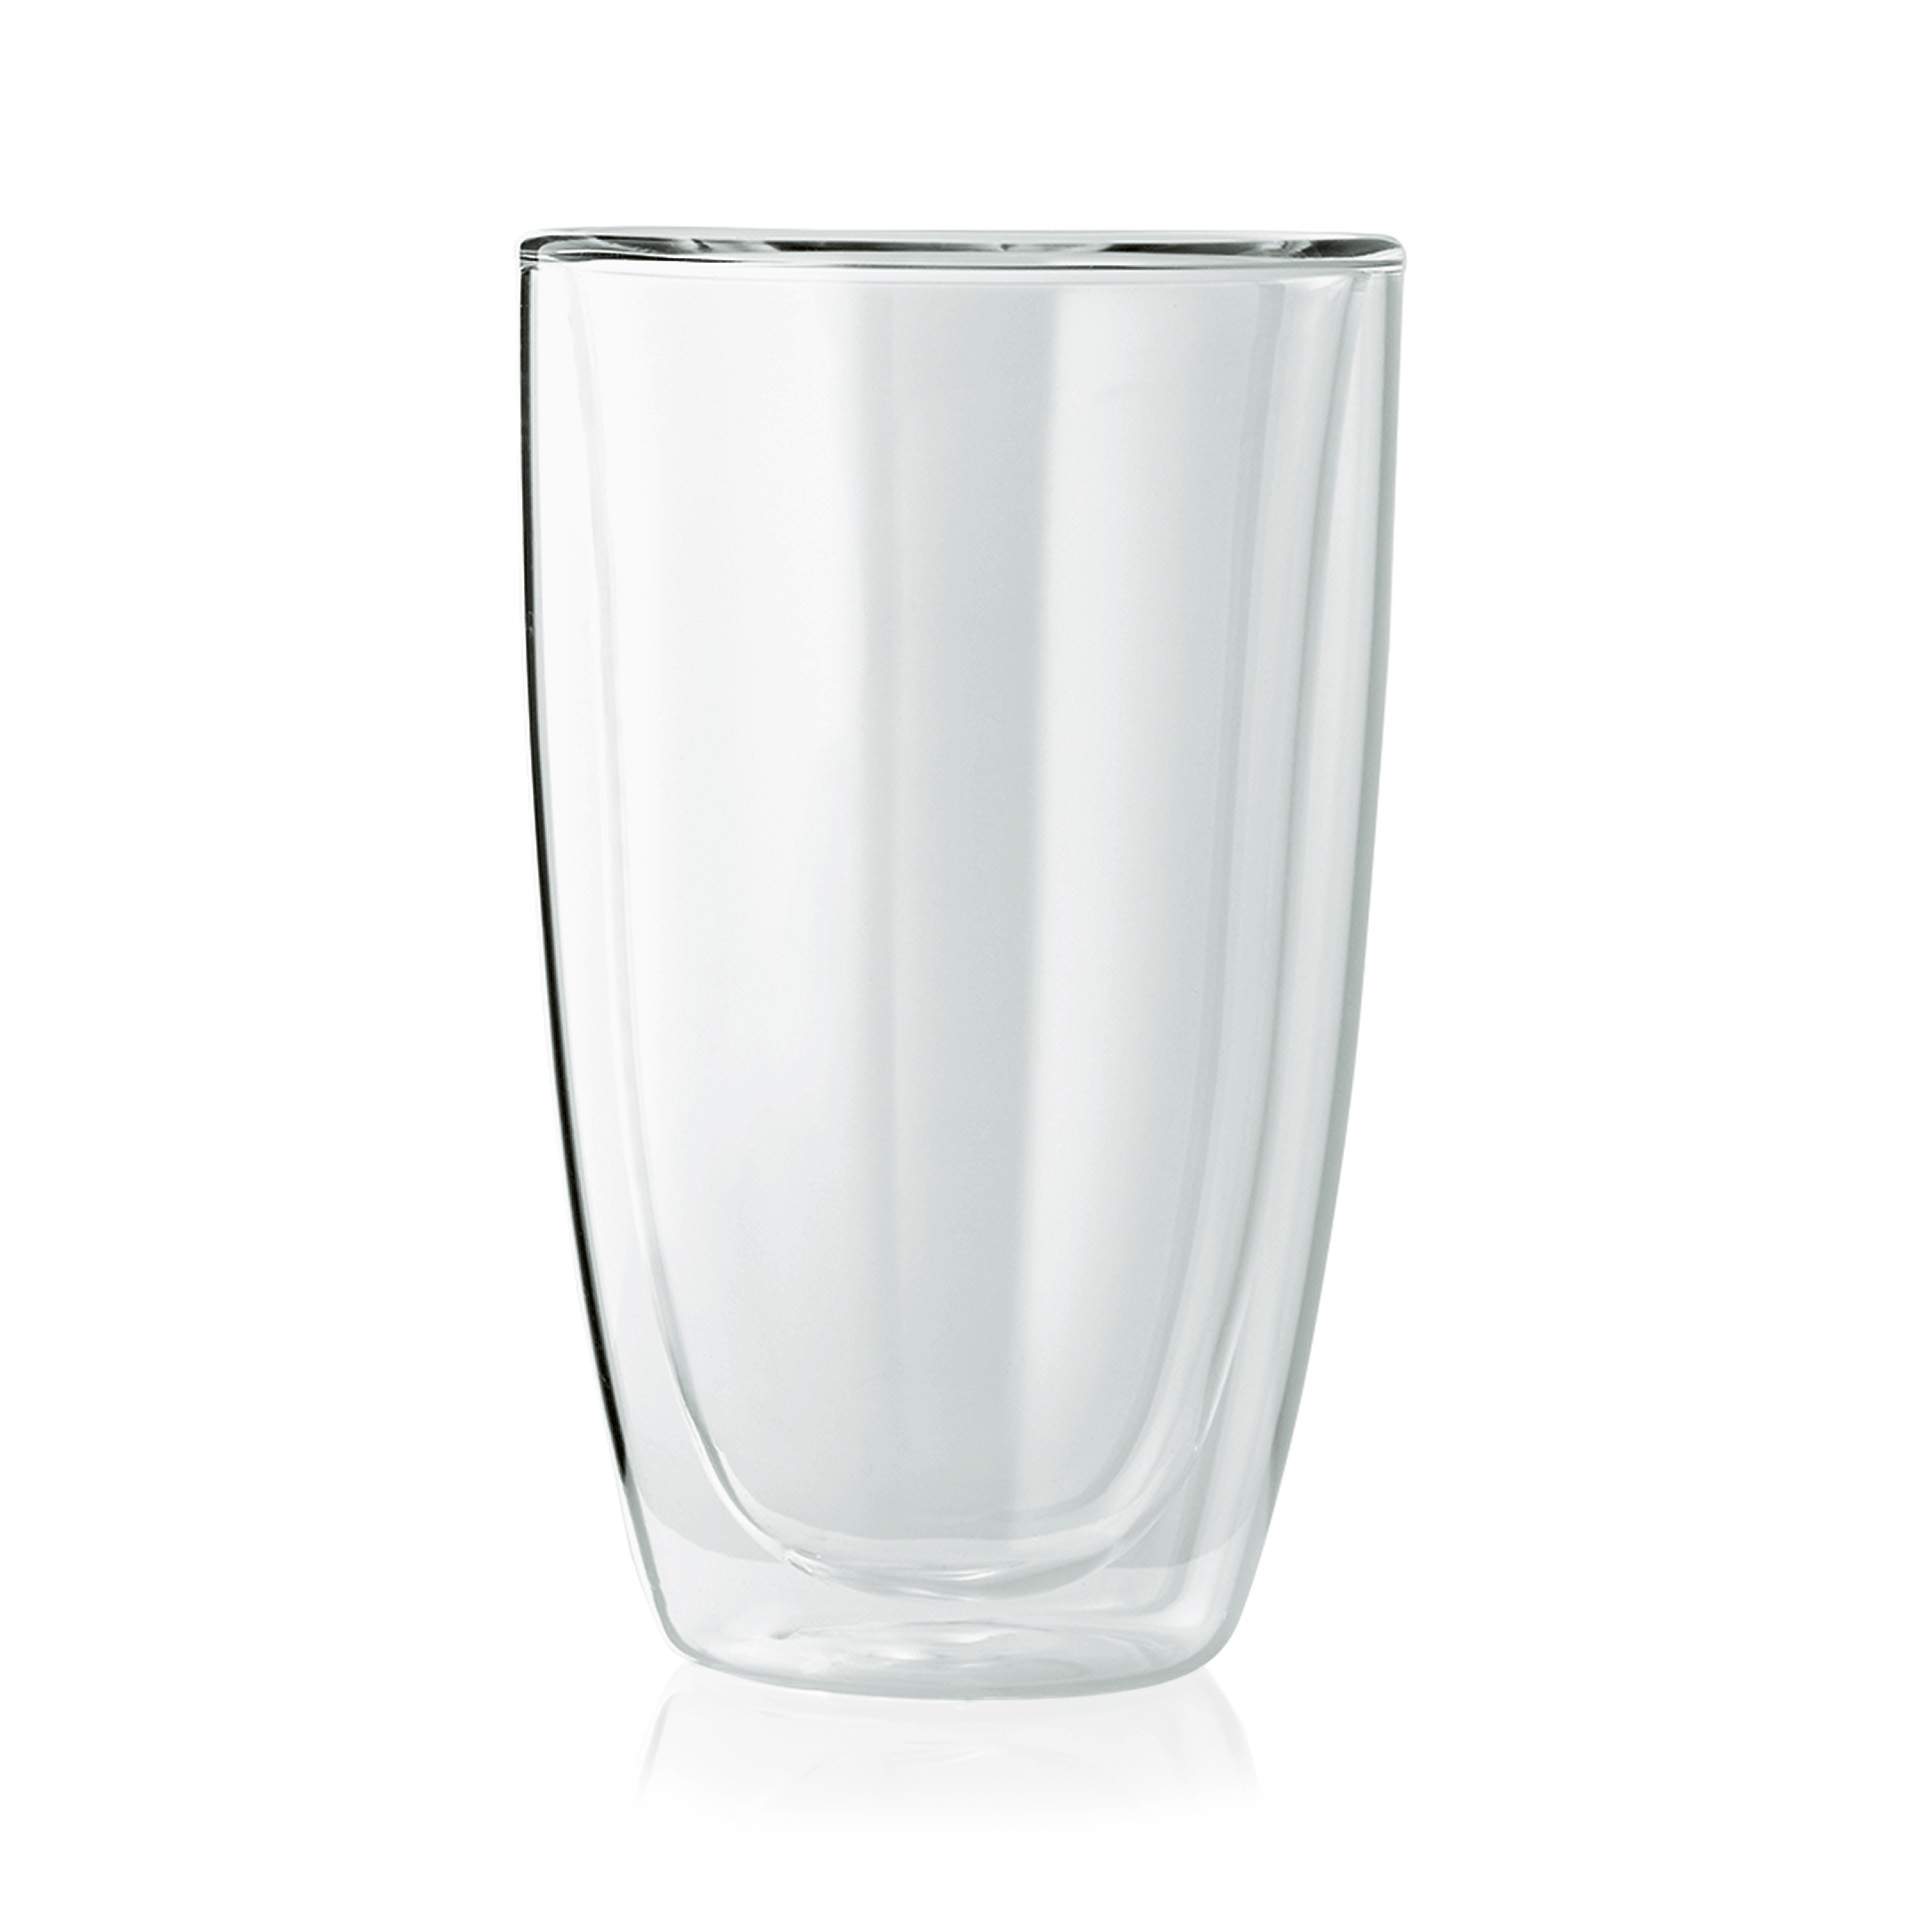 Caffe Latte Glas - Borosilikatglas - Serie Lounge - Abm. 13,6 cm - Ø oben / unten 8,4 / 5,4 cm - Inhalt 0,36 l - Glas - 1773036-A